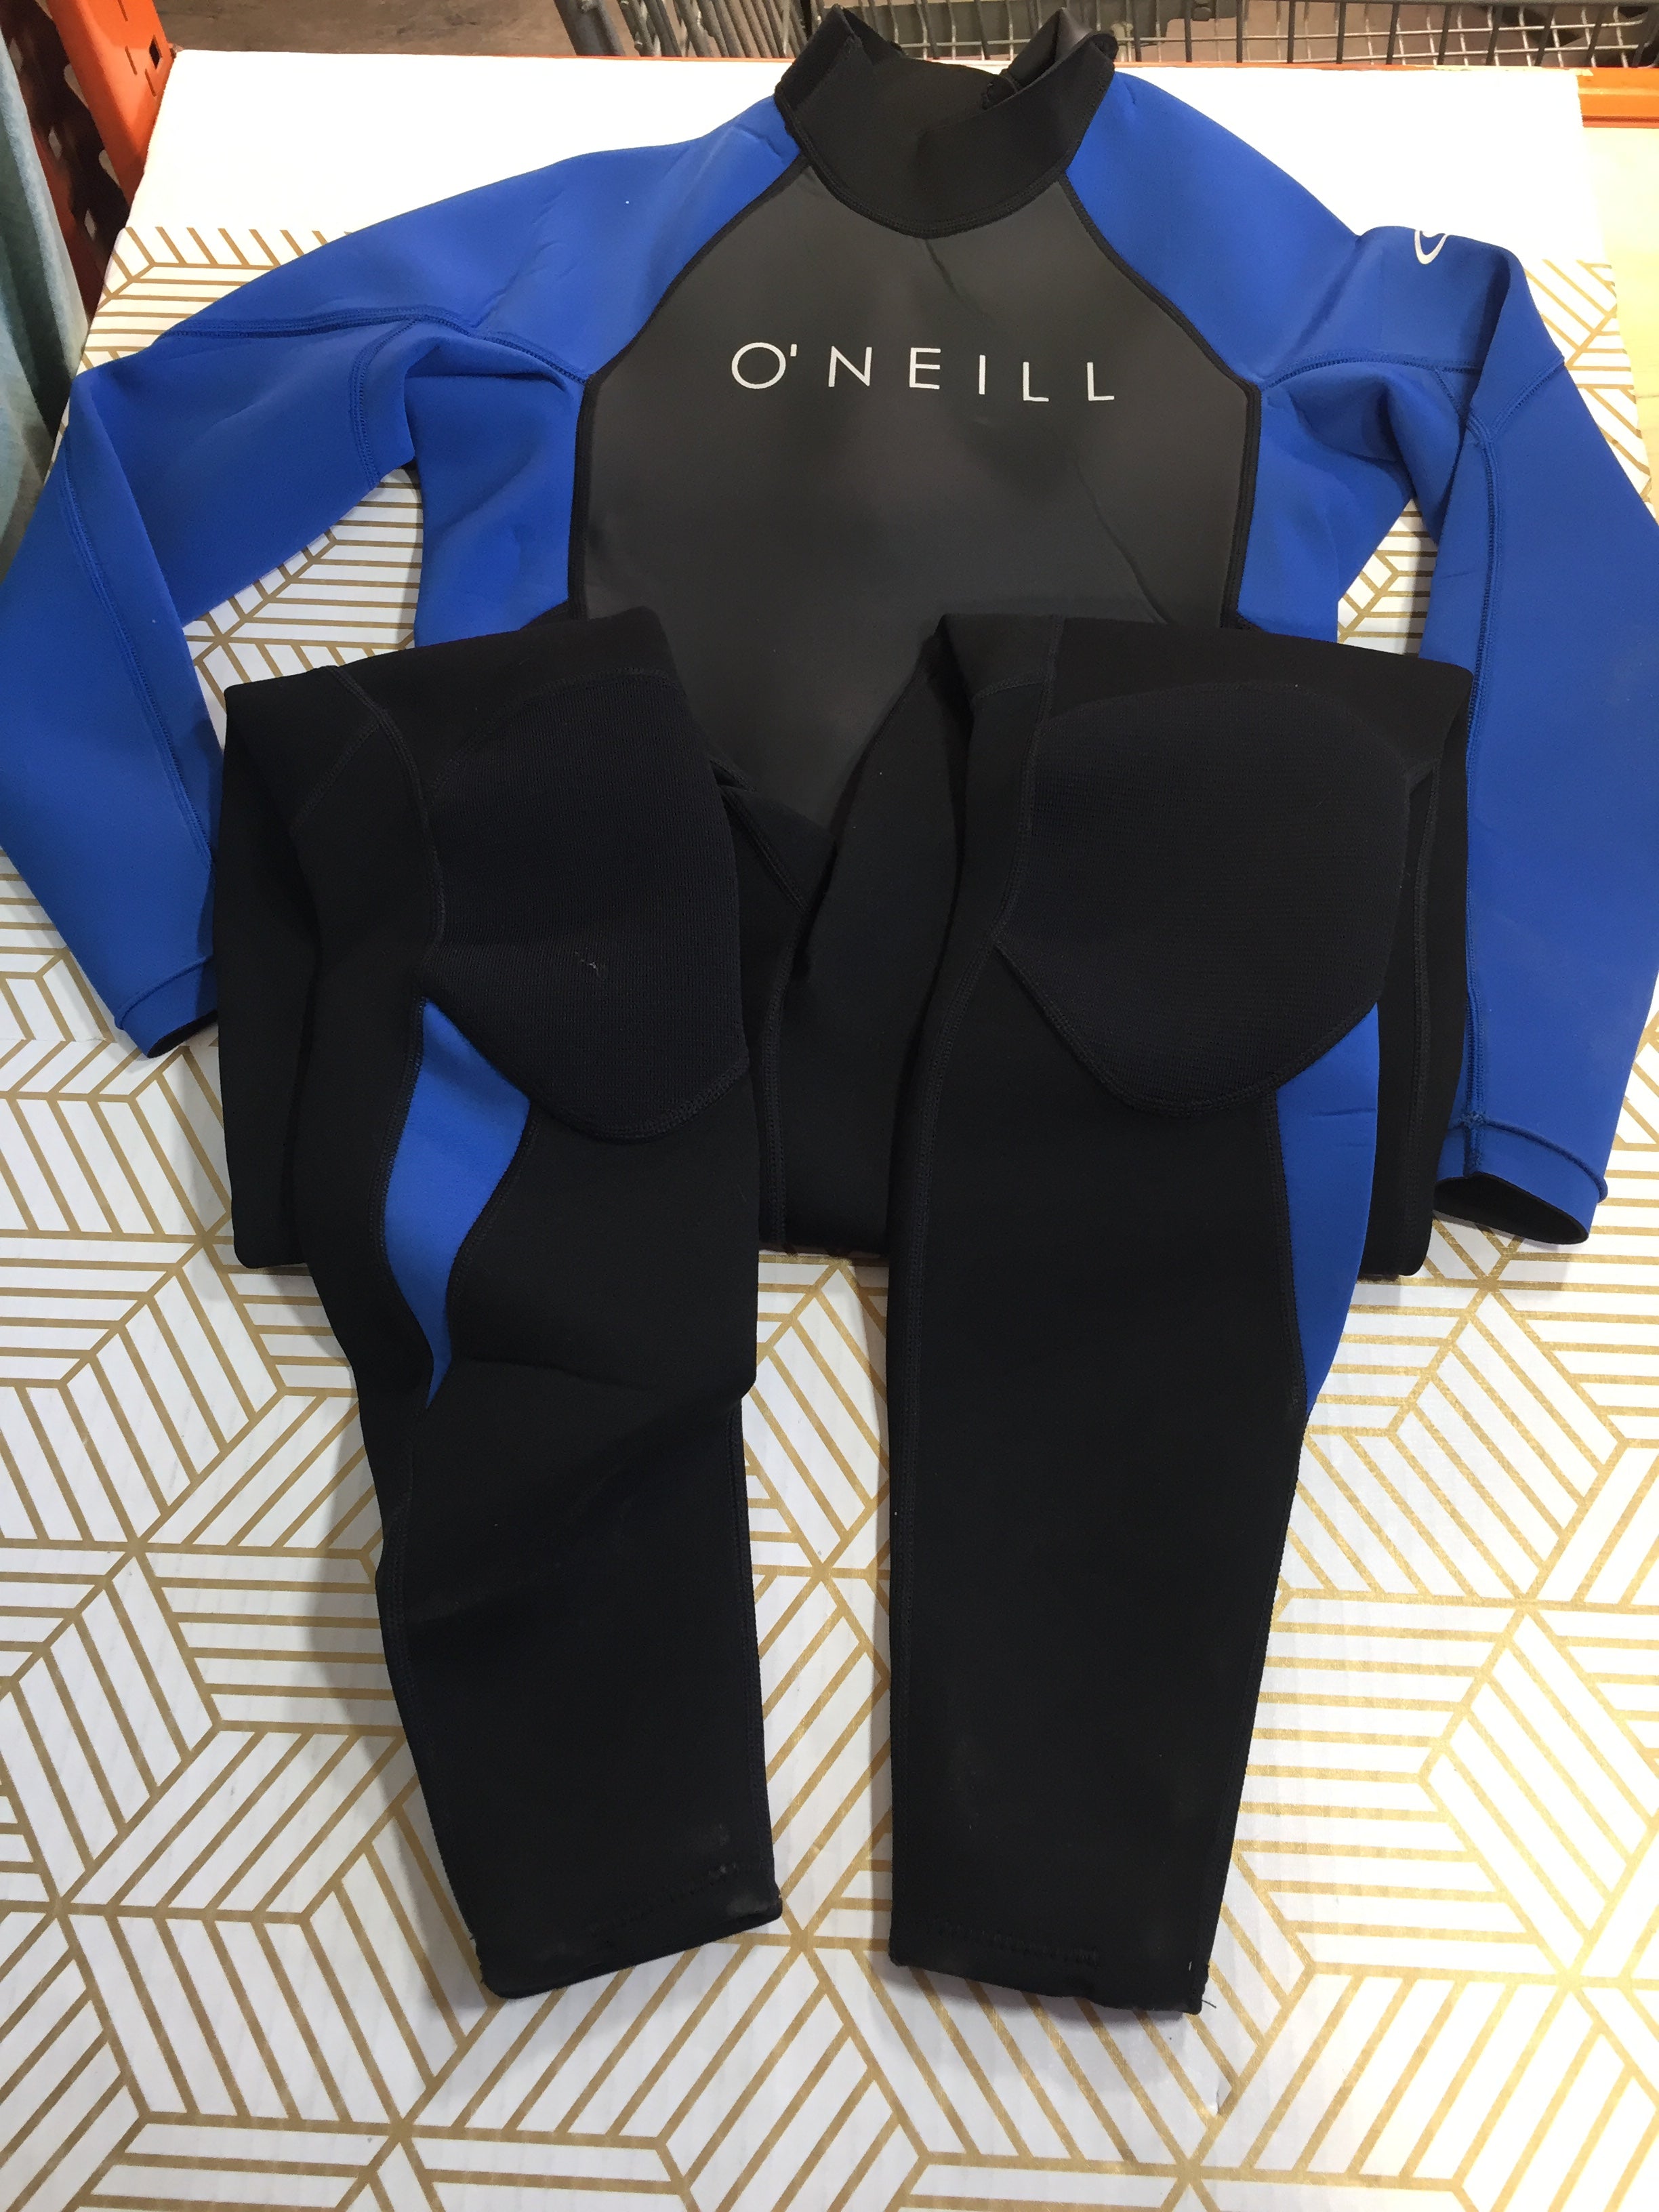 O'Neill Men's Reactor 3/2mm Back Zip Full Wetsuit - Size Medium (7762981814510)